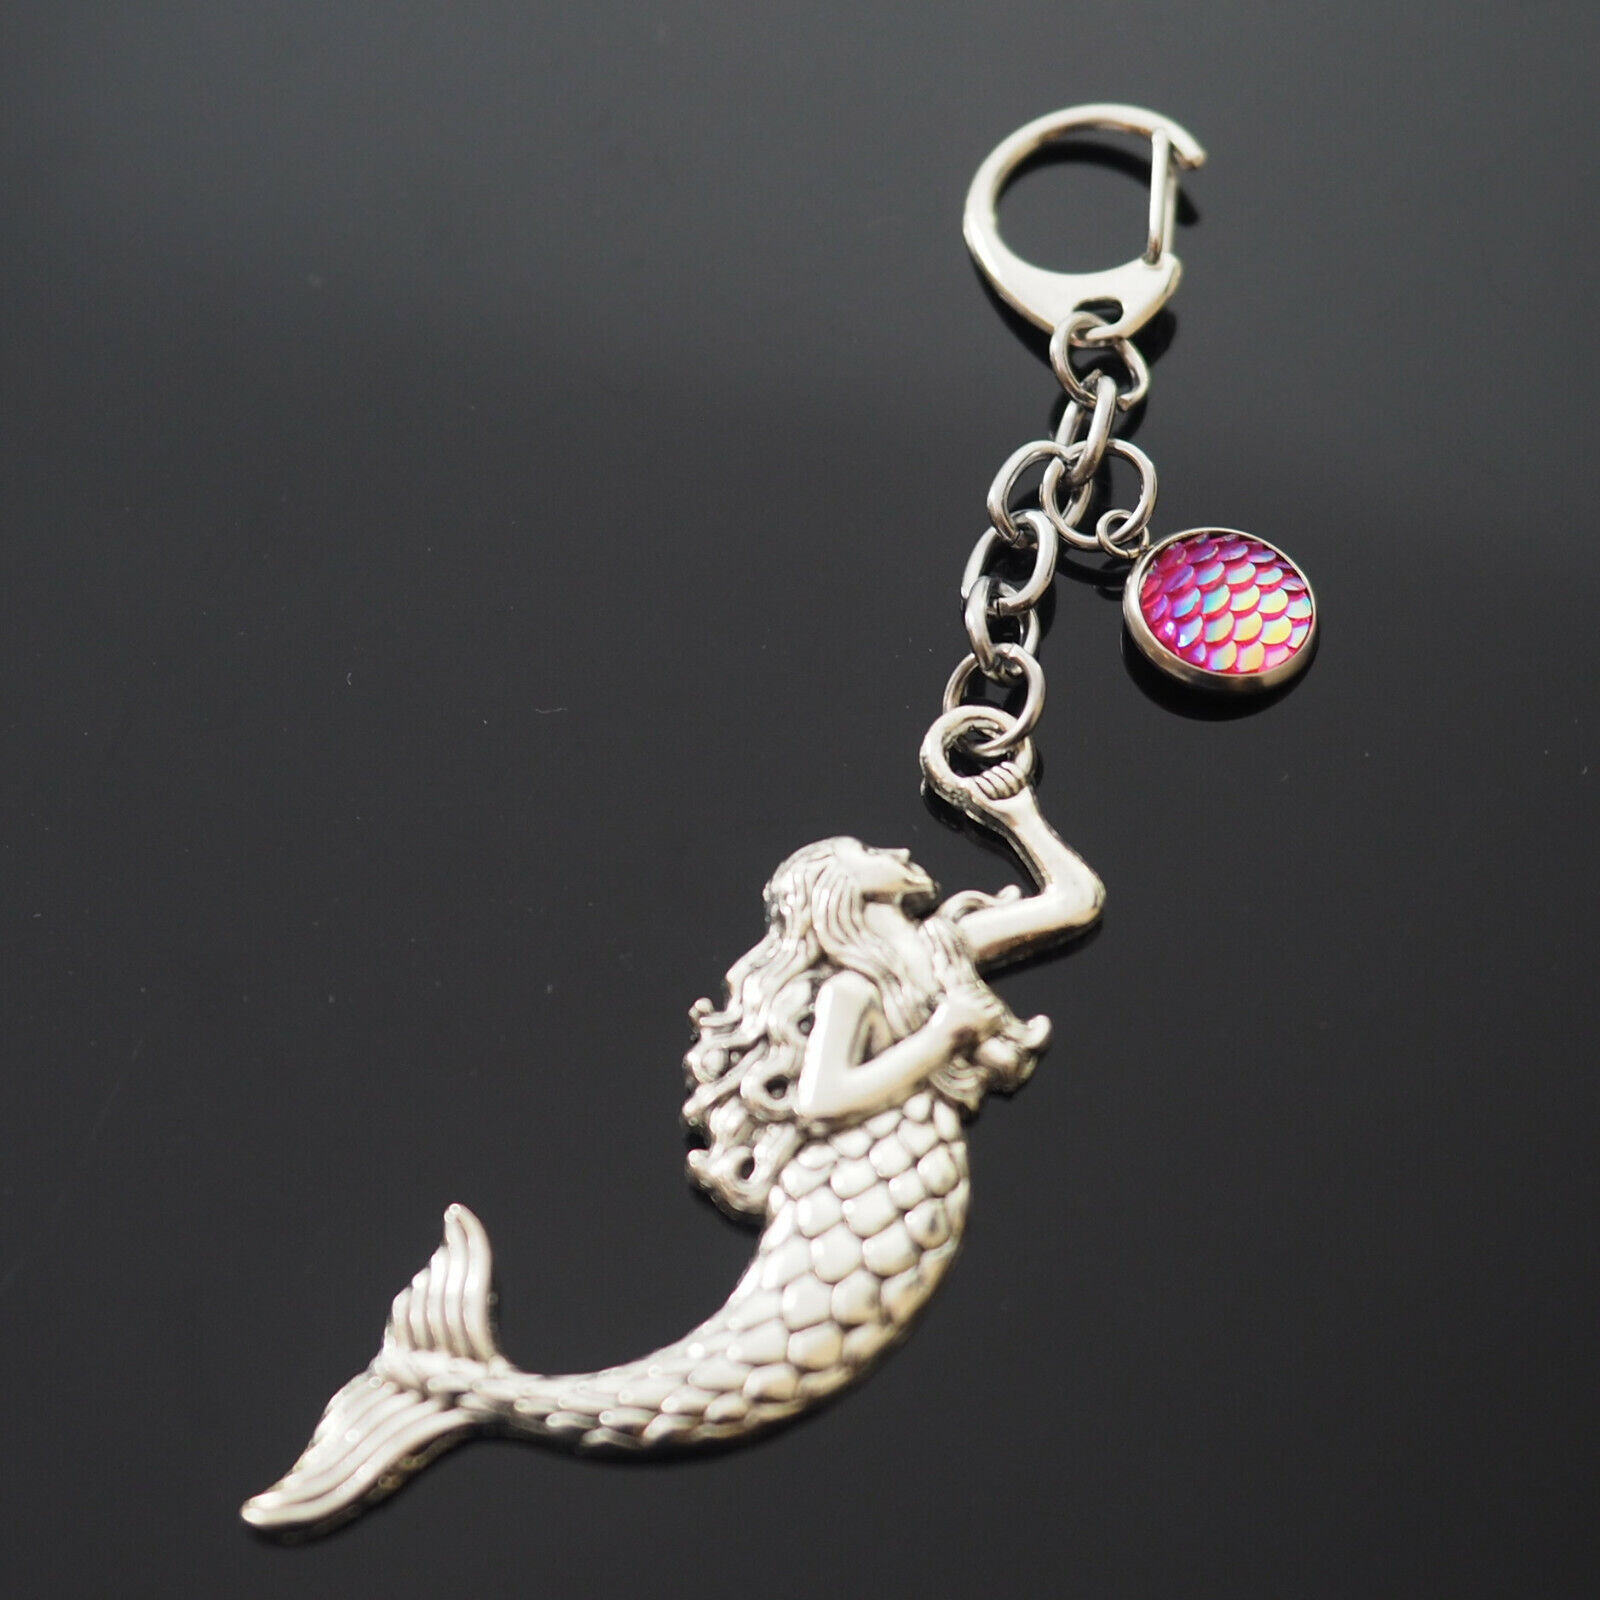 Mermaid Key Chain Clip Charm Pendant Keychain Sea Siren Nymph Shimmer Fish Scale